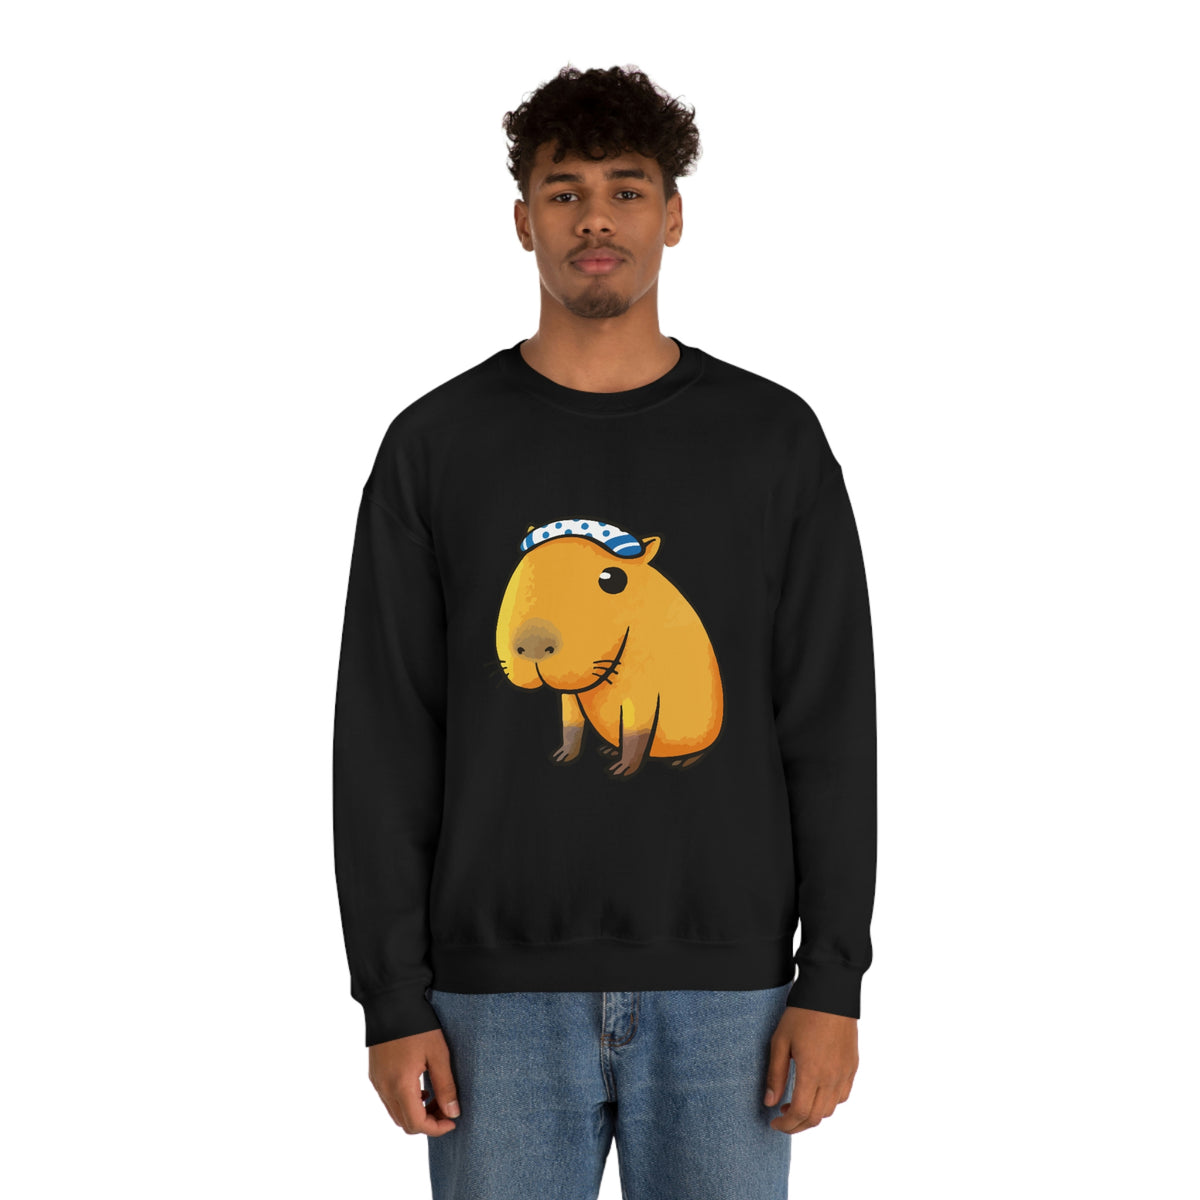 Capybara - Unisex Sweatshirt